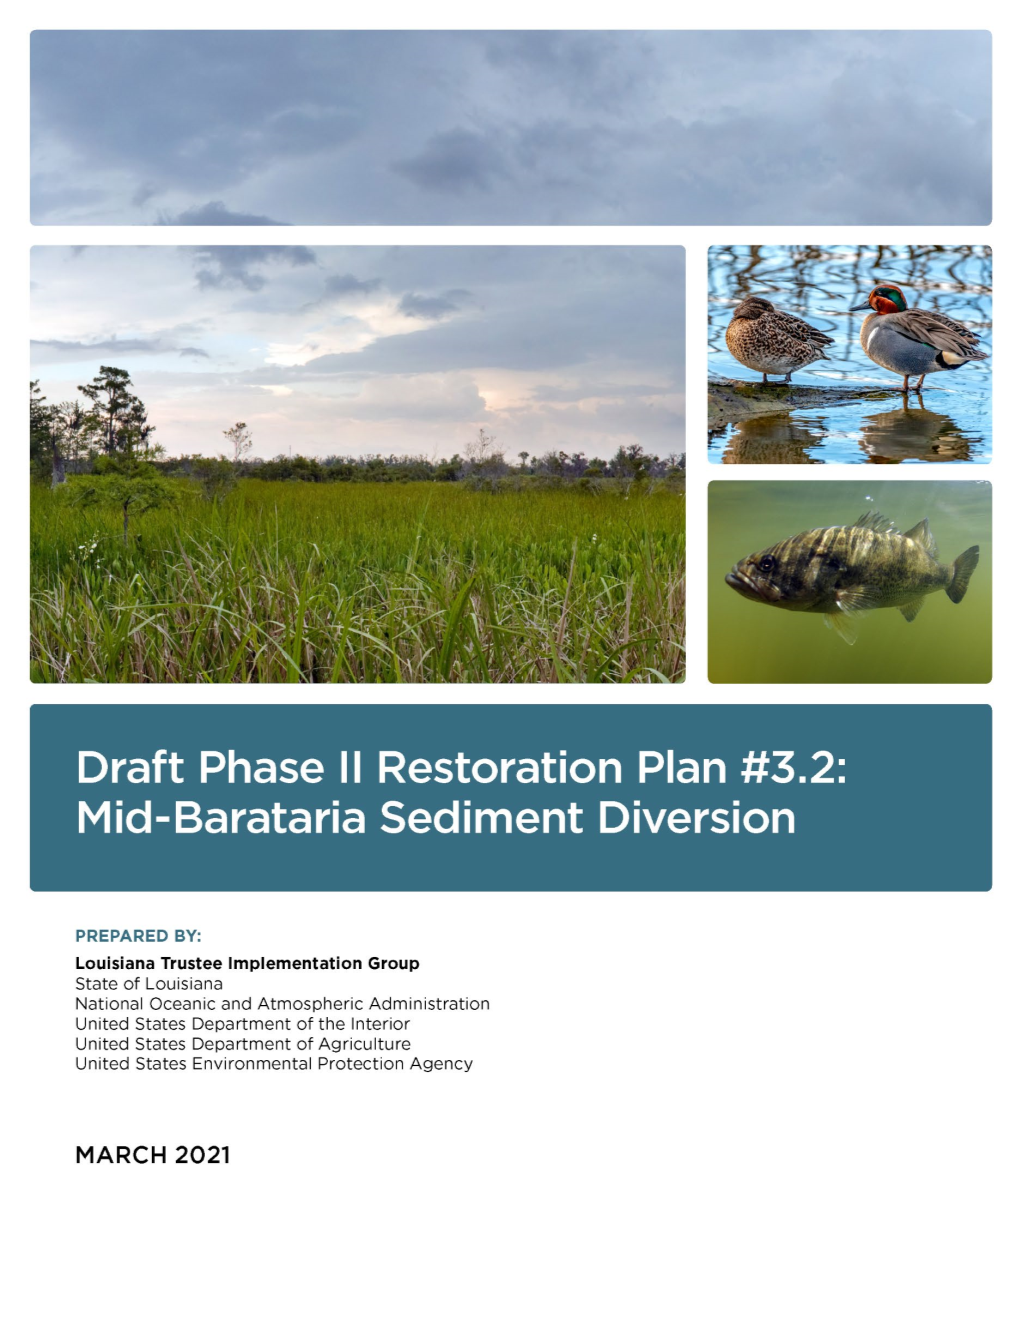 Draft Phase II Restoration Plan #3.2: Mid-Barataria Sediment Diversion